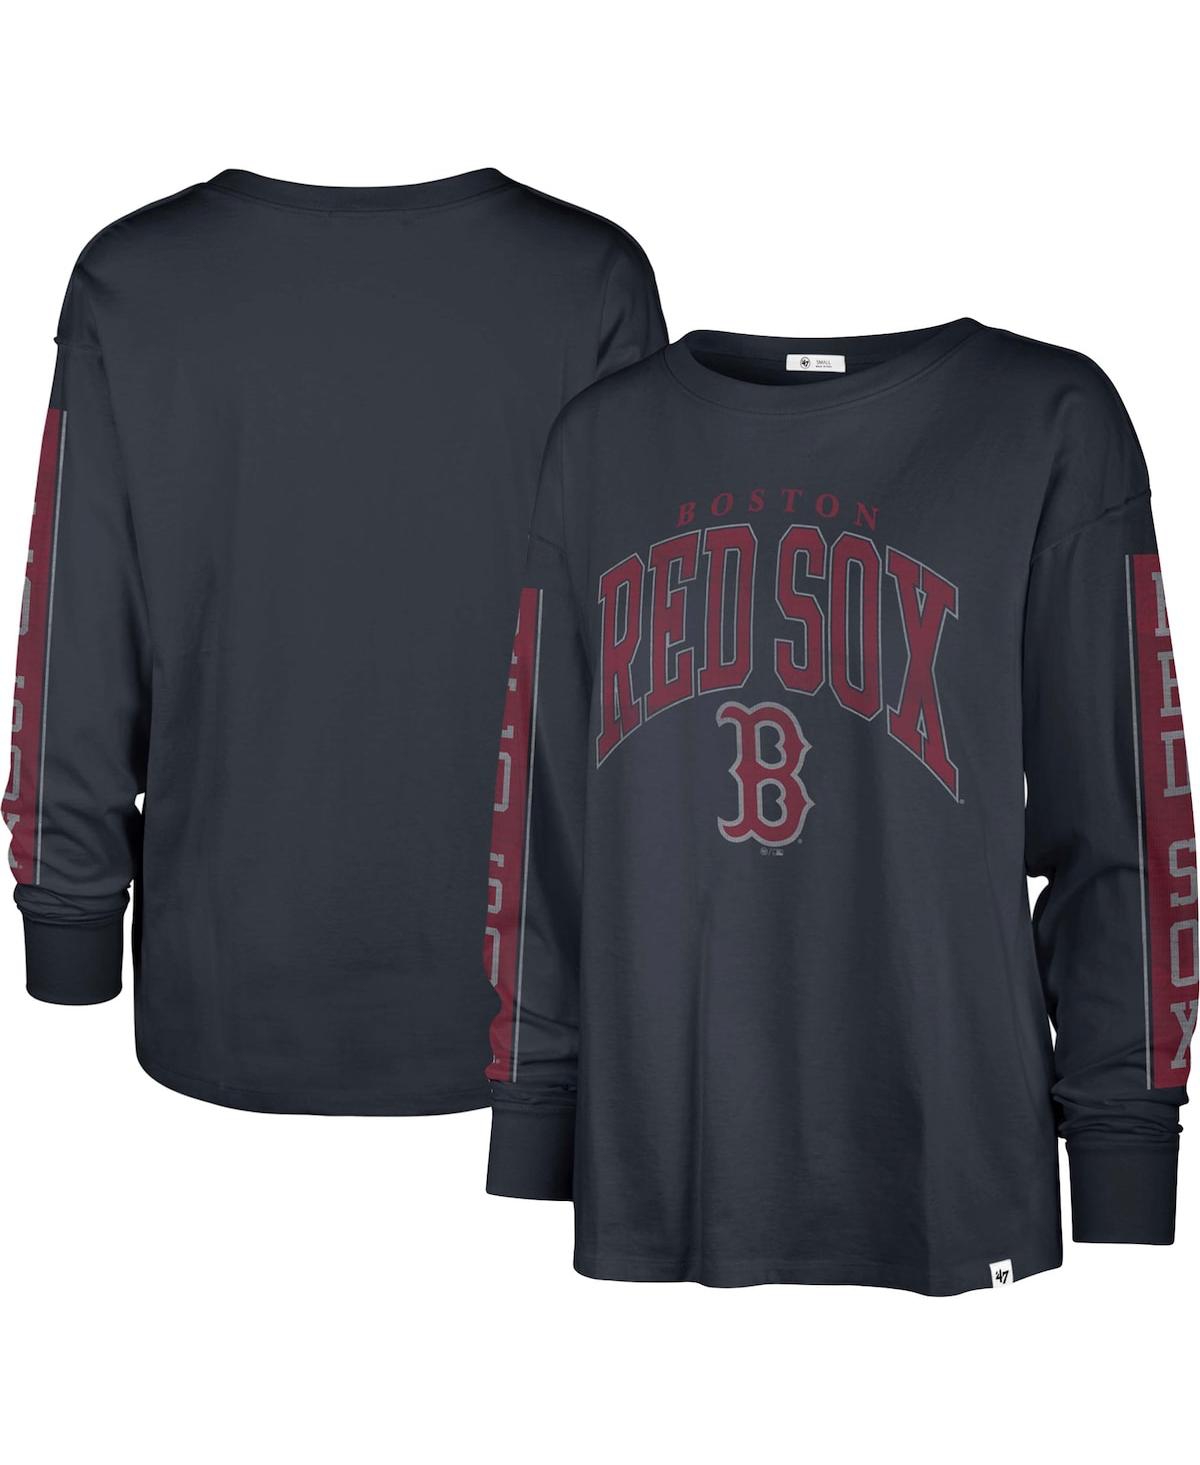 47 Navy Boston Red Sox Statement Long Sleeve T-Shirt